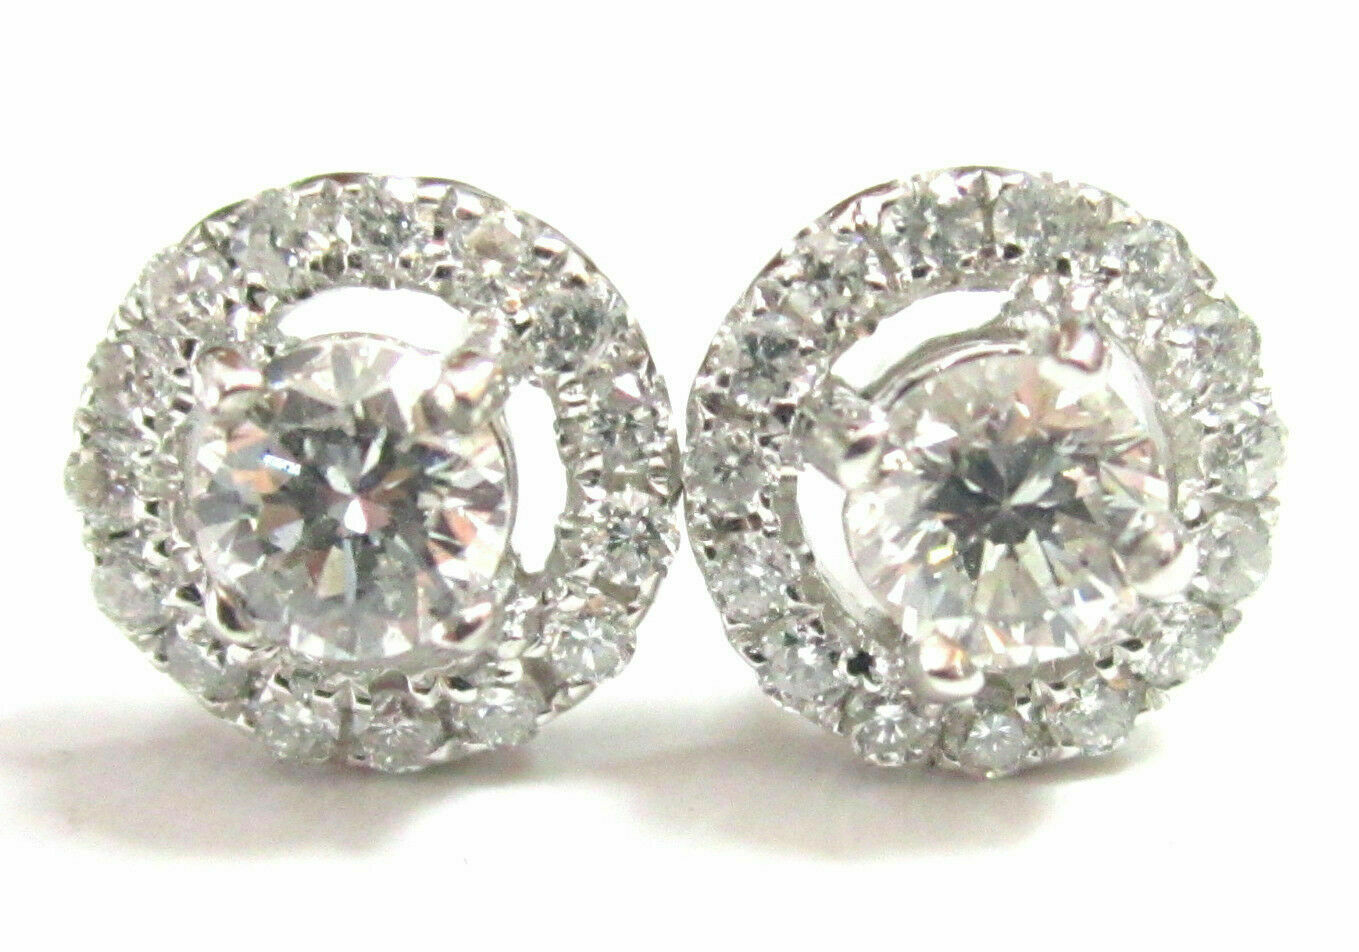 Fine .91TCW Floral Round Diamond Stud Earrings Push Back I SI2 18k White Gold